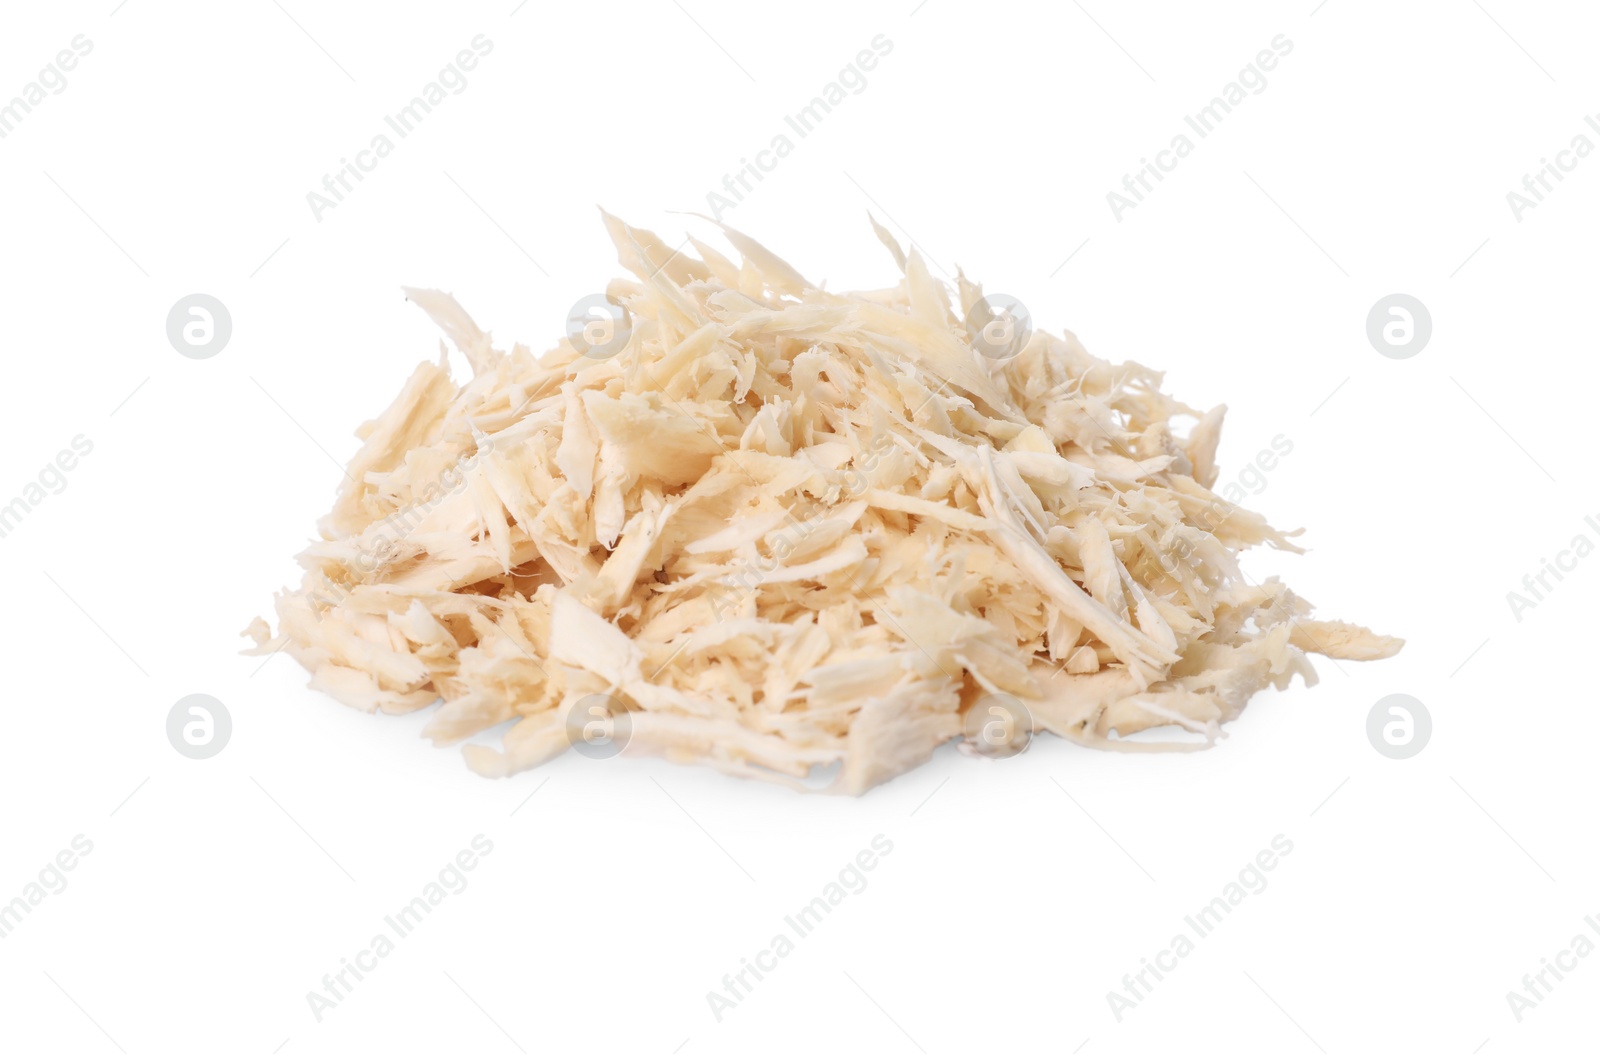 Photo of Pile of grated horseradish isolated on white